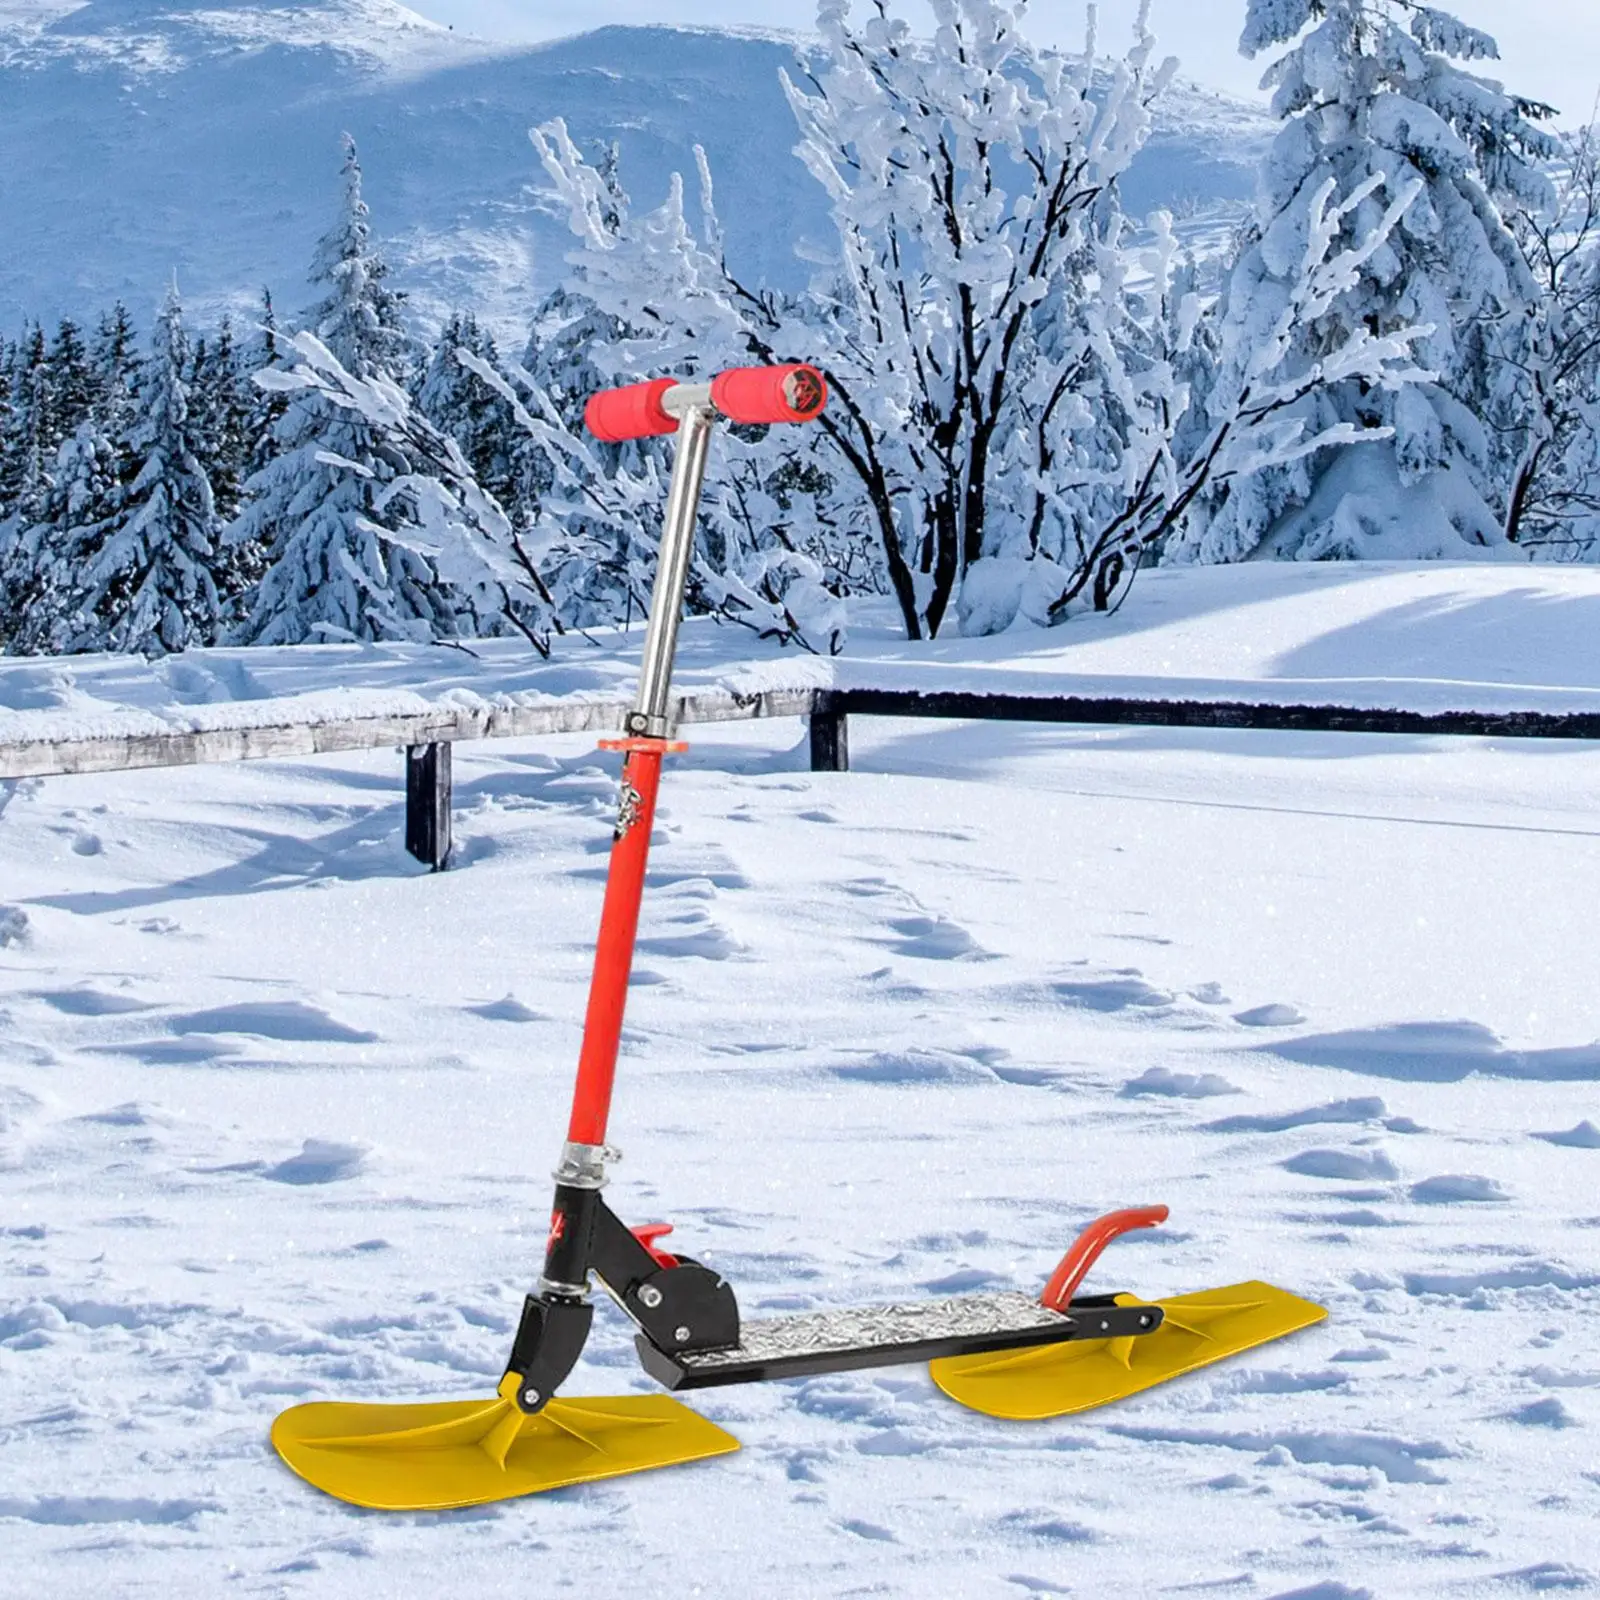 2x Snow Sled Ski Scooter Kit Ski Board Sleigh for Winter Game Toys Skiing